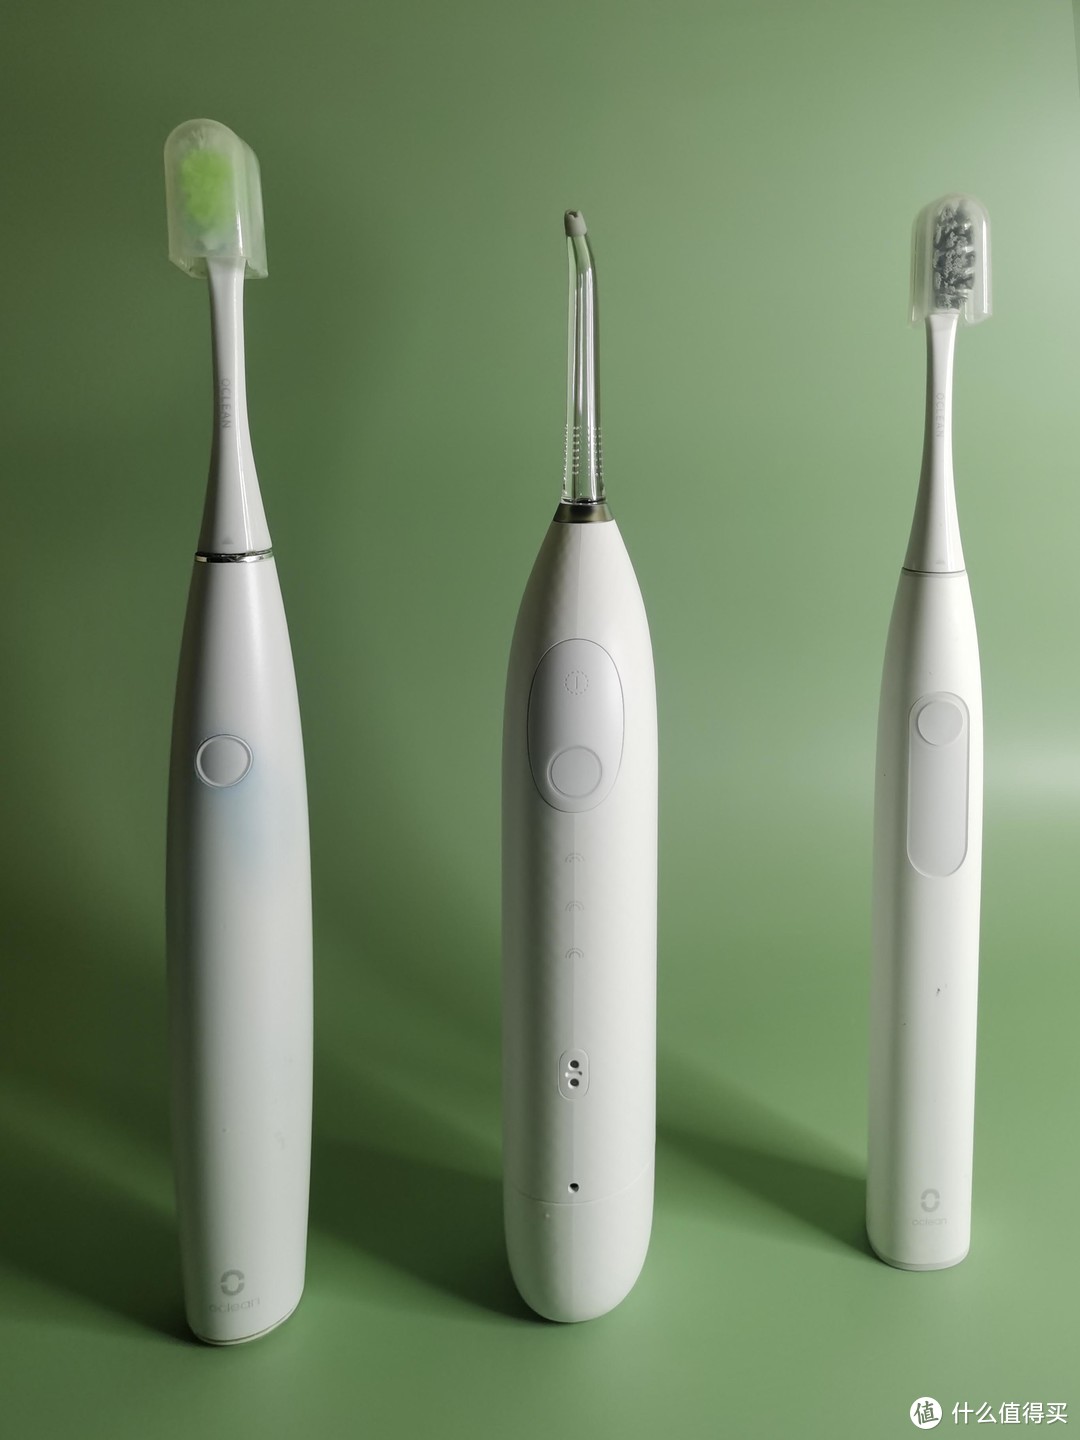  Review：有了电动牙刷还不够？Oclean W1冲牙器值得入手！